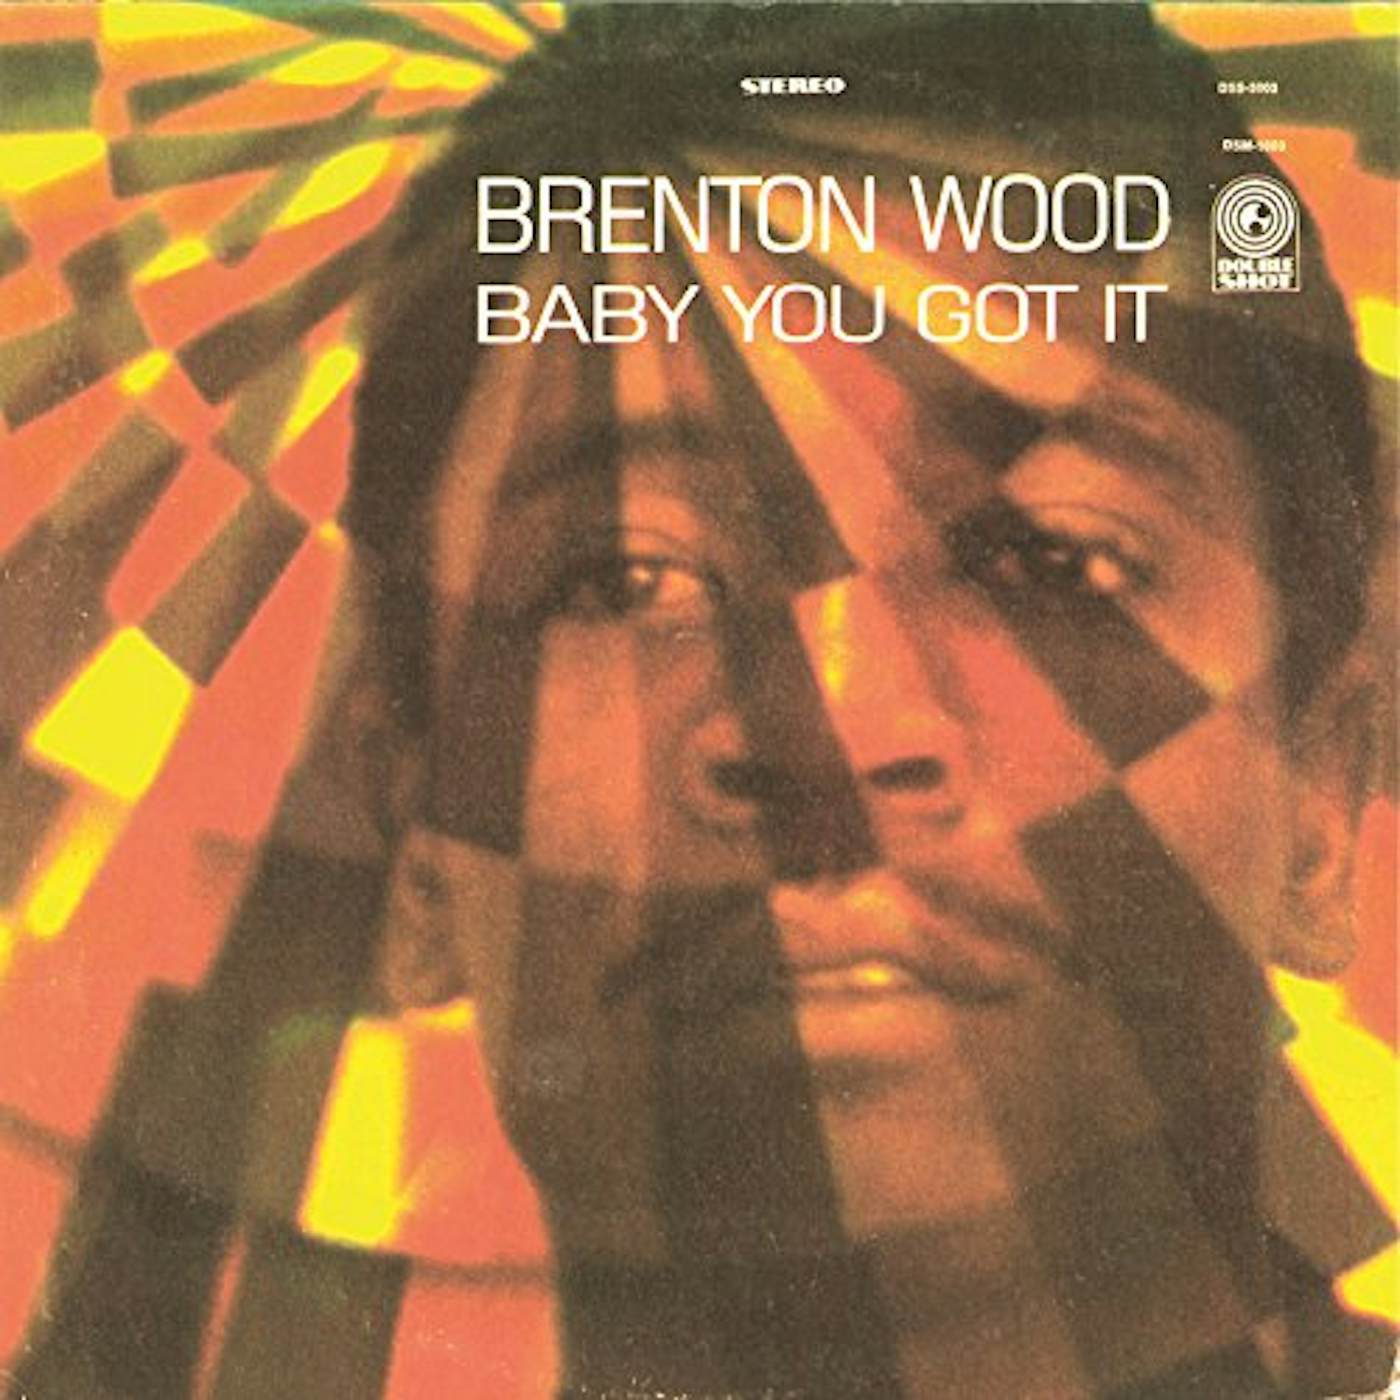 Brenton Wood Baby You Got It Vinyl Record